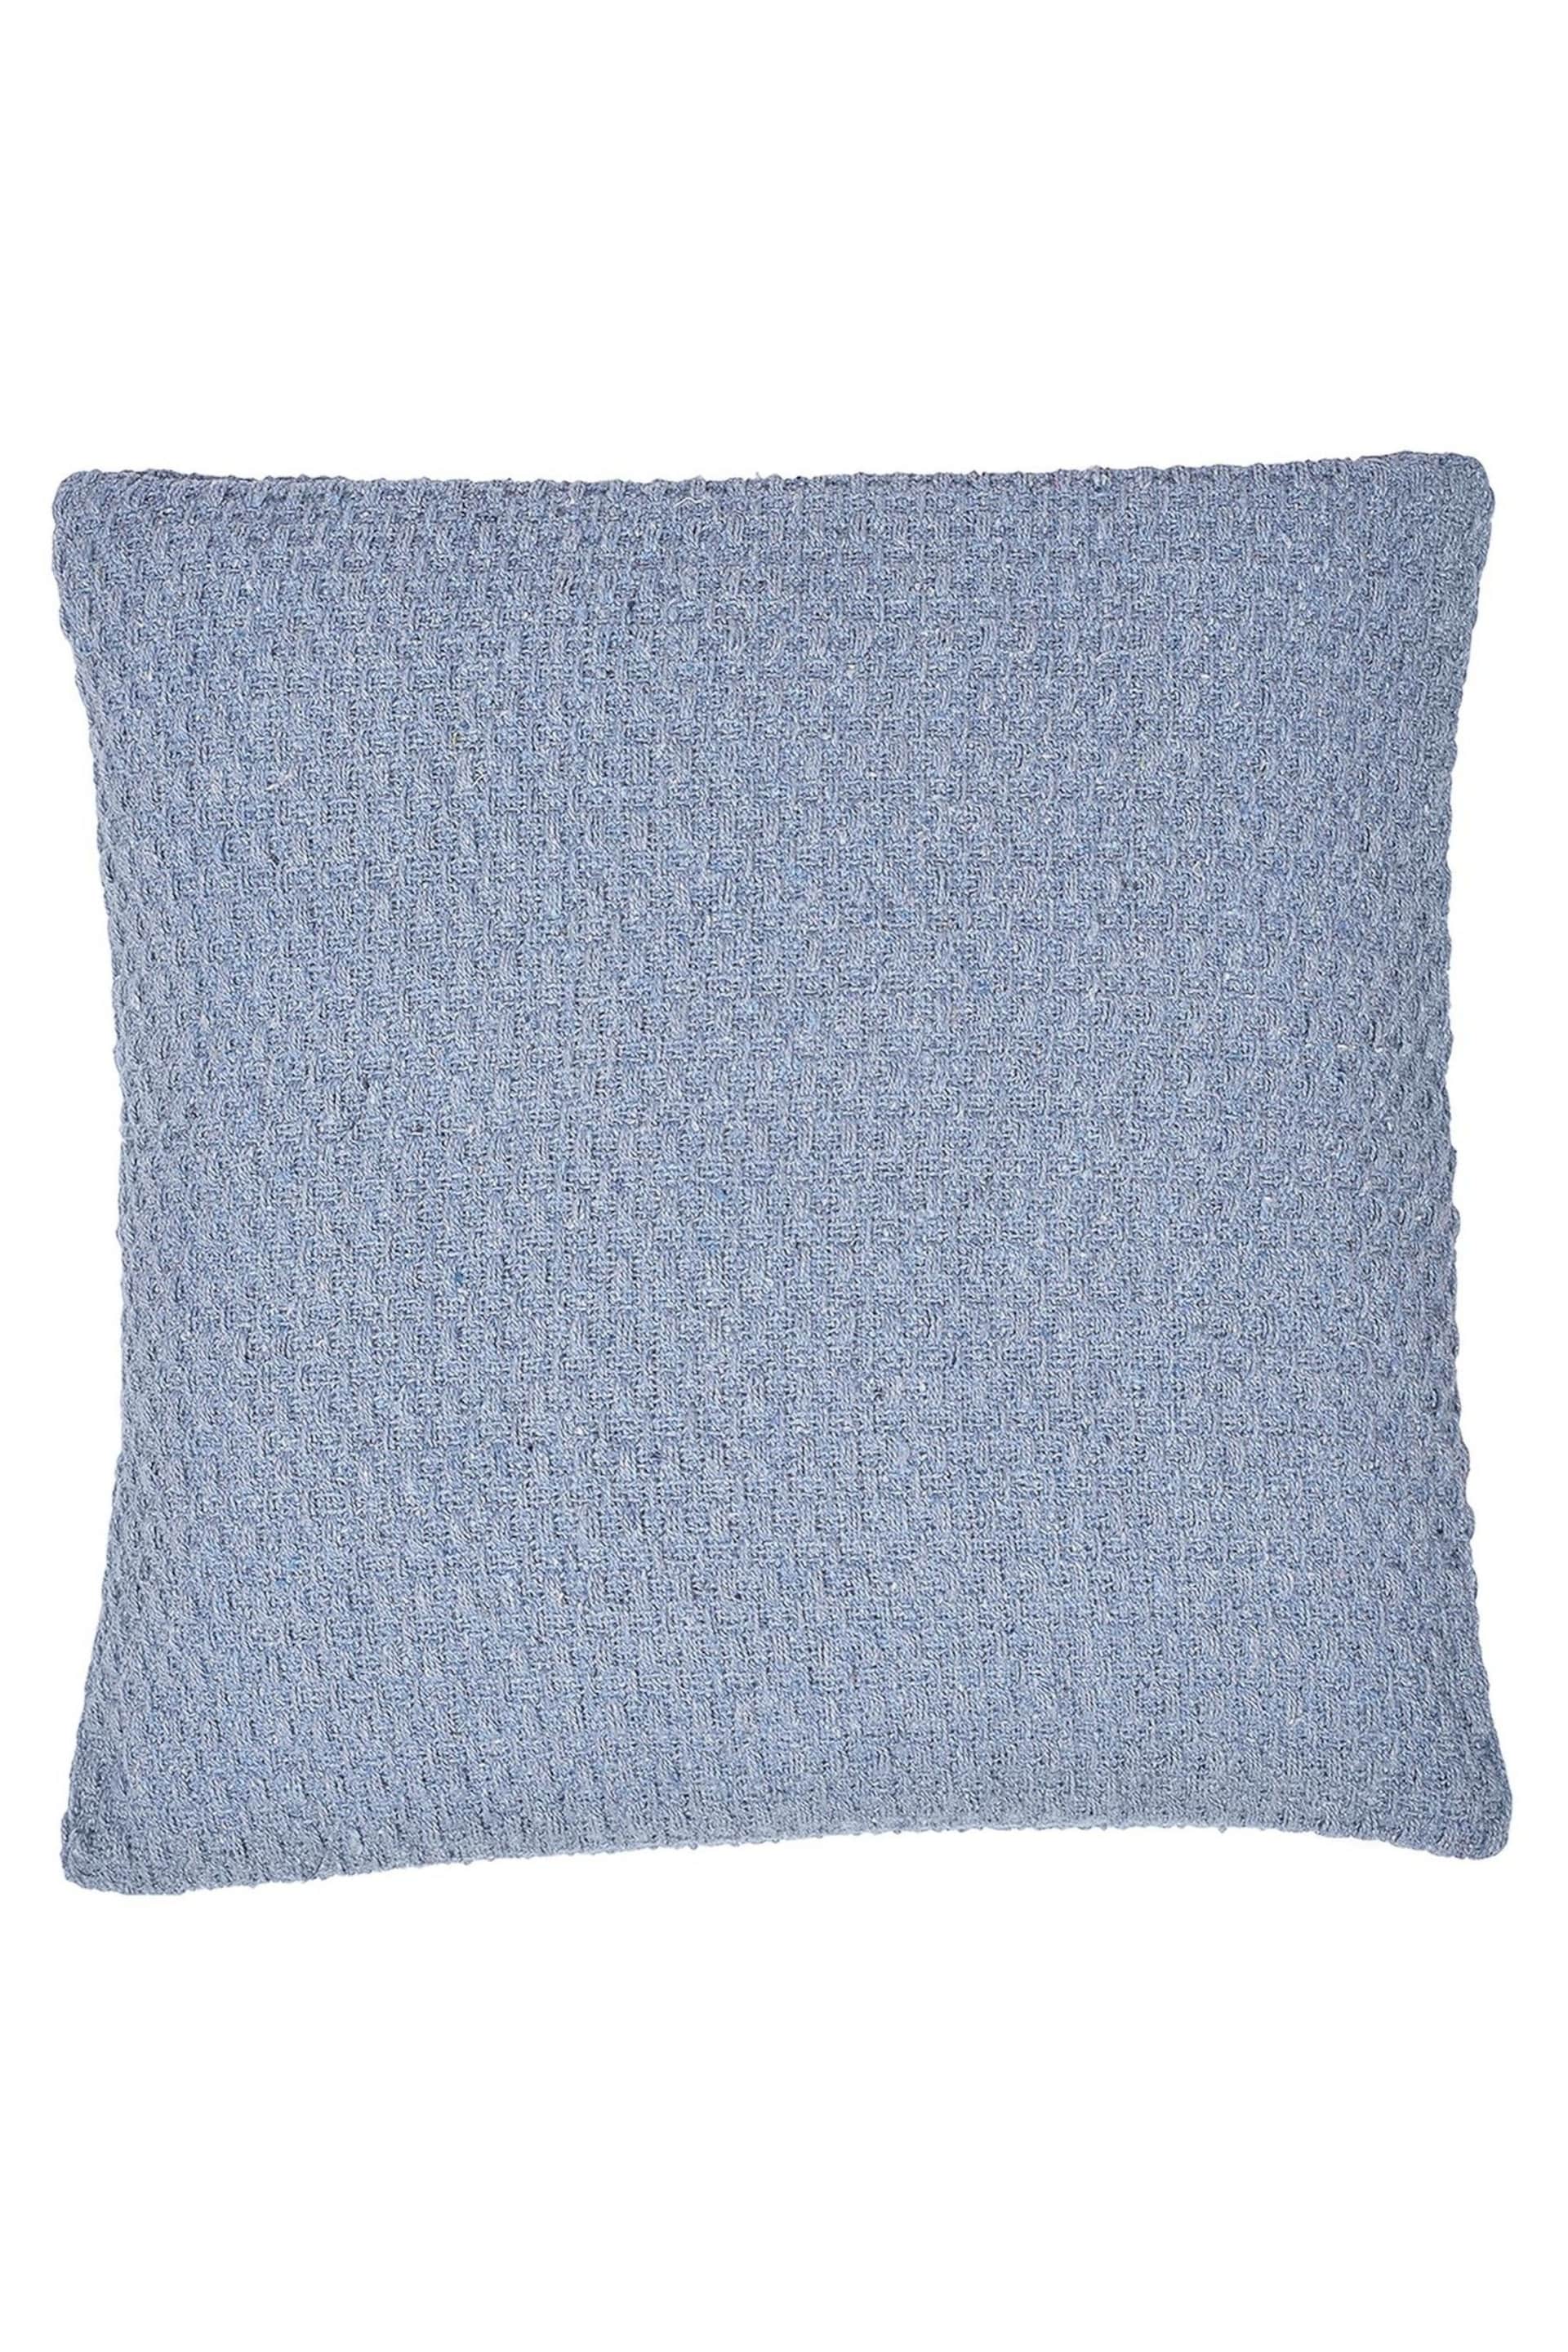 Drift Home Blue Hayden Filled Cushion - Image 2 of 4